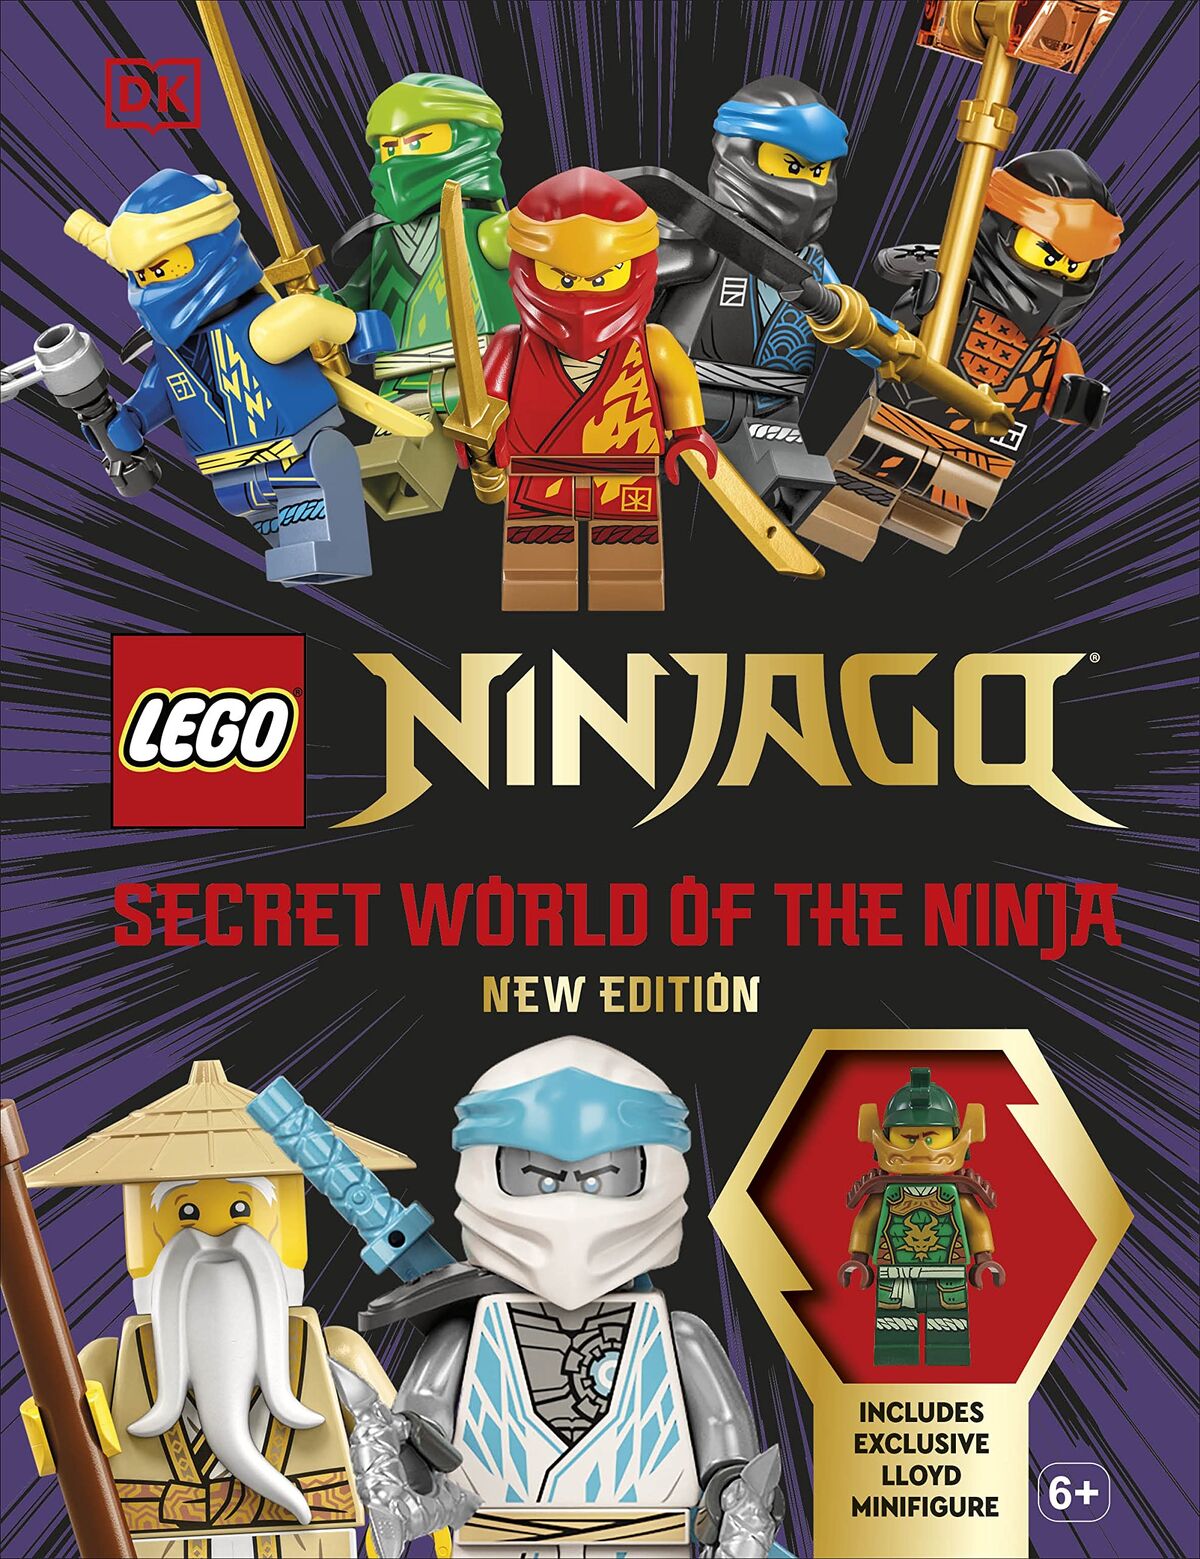 Opschudding Mislukking schuintrekken Secret World of the Ninja New Edition | Ninjago Wiki | Fandom